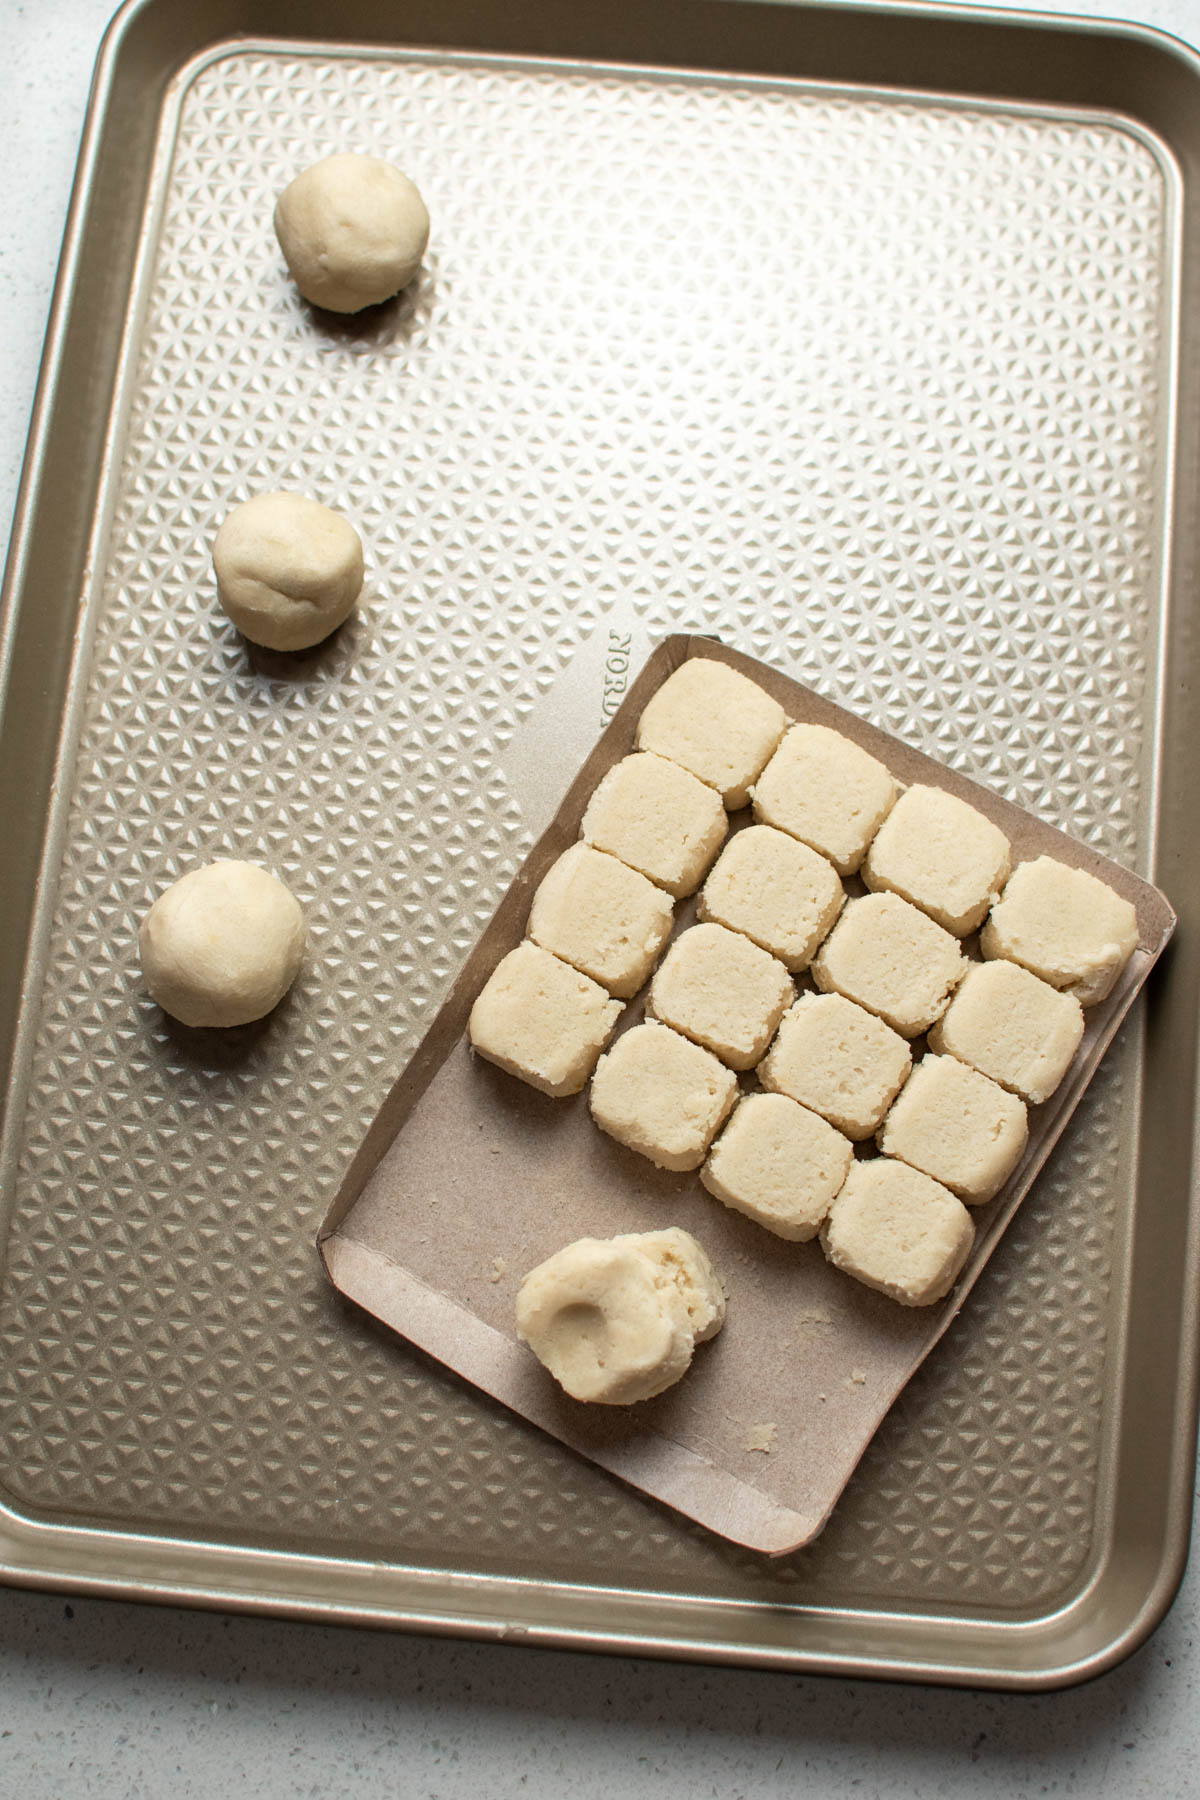 Sugar cookie dough balls on gold baking sheet and cardboard tray.